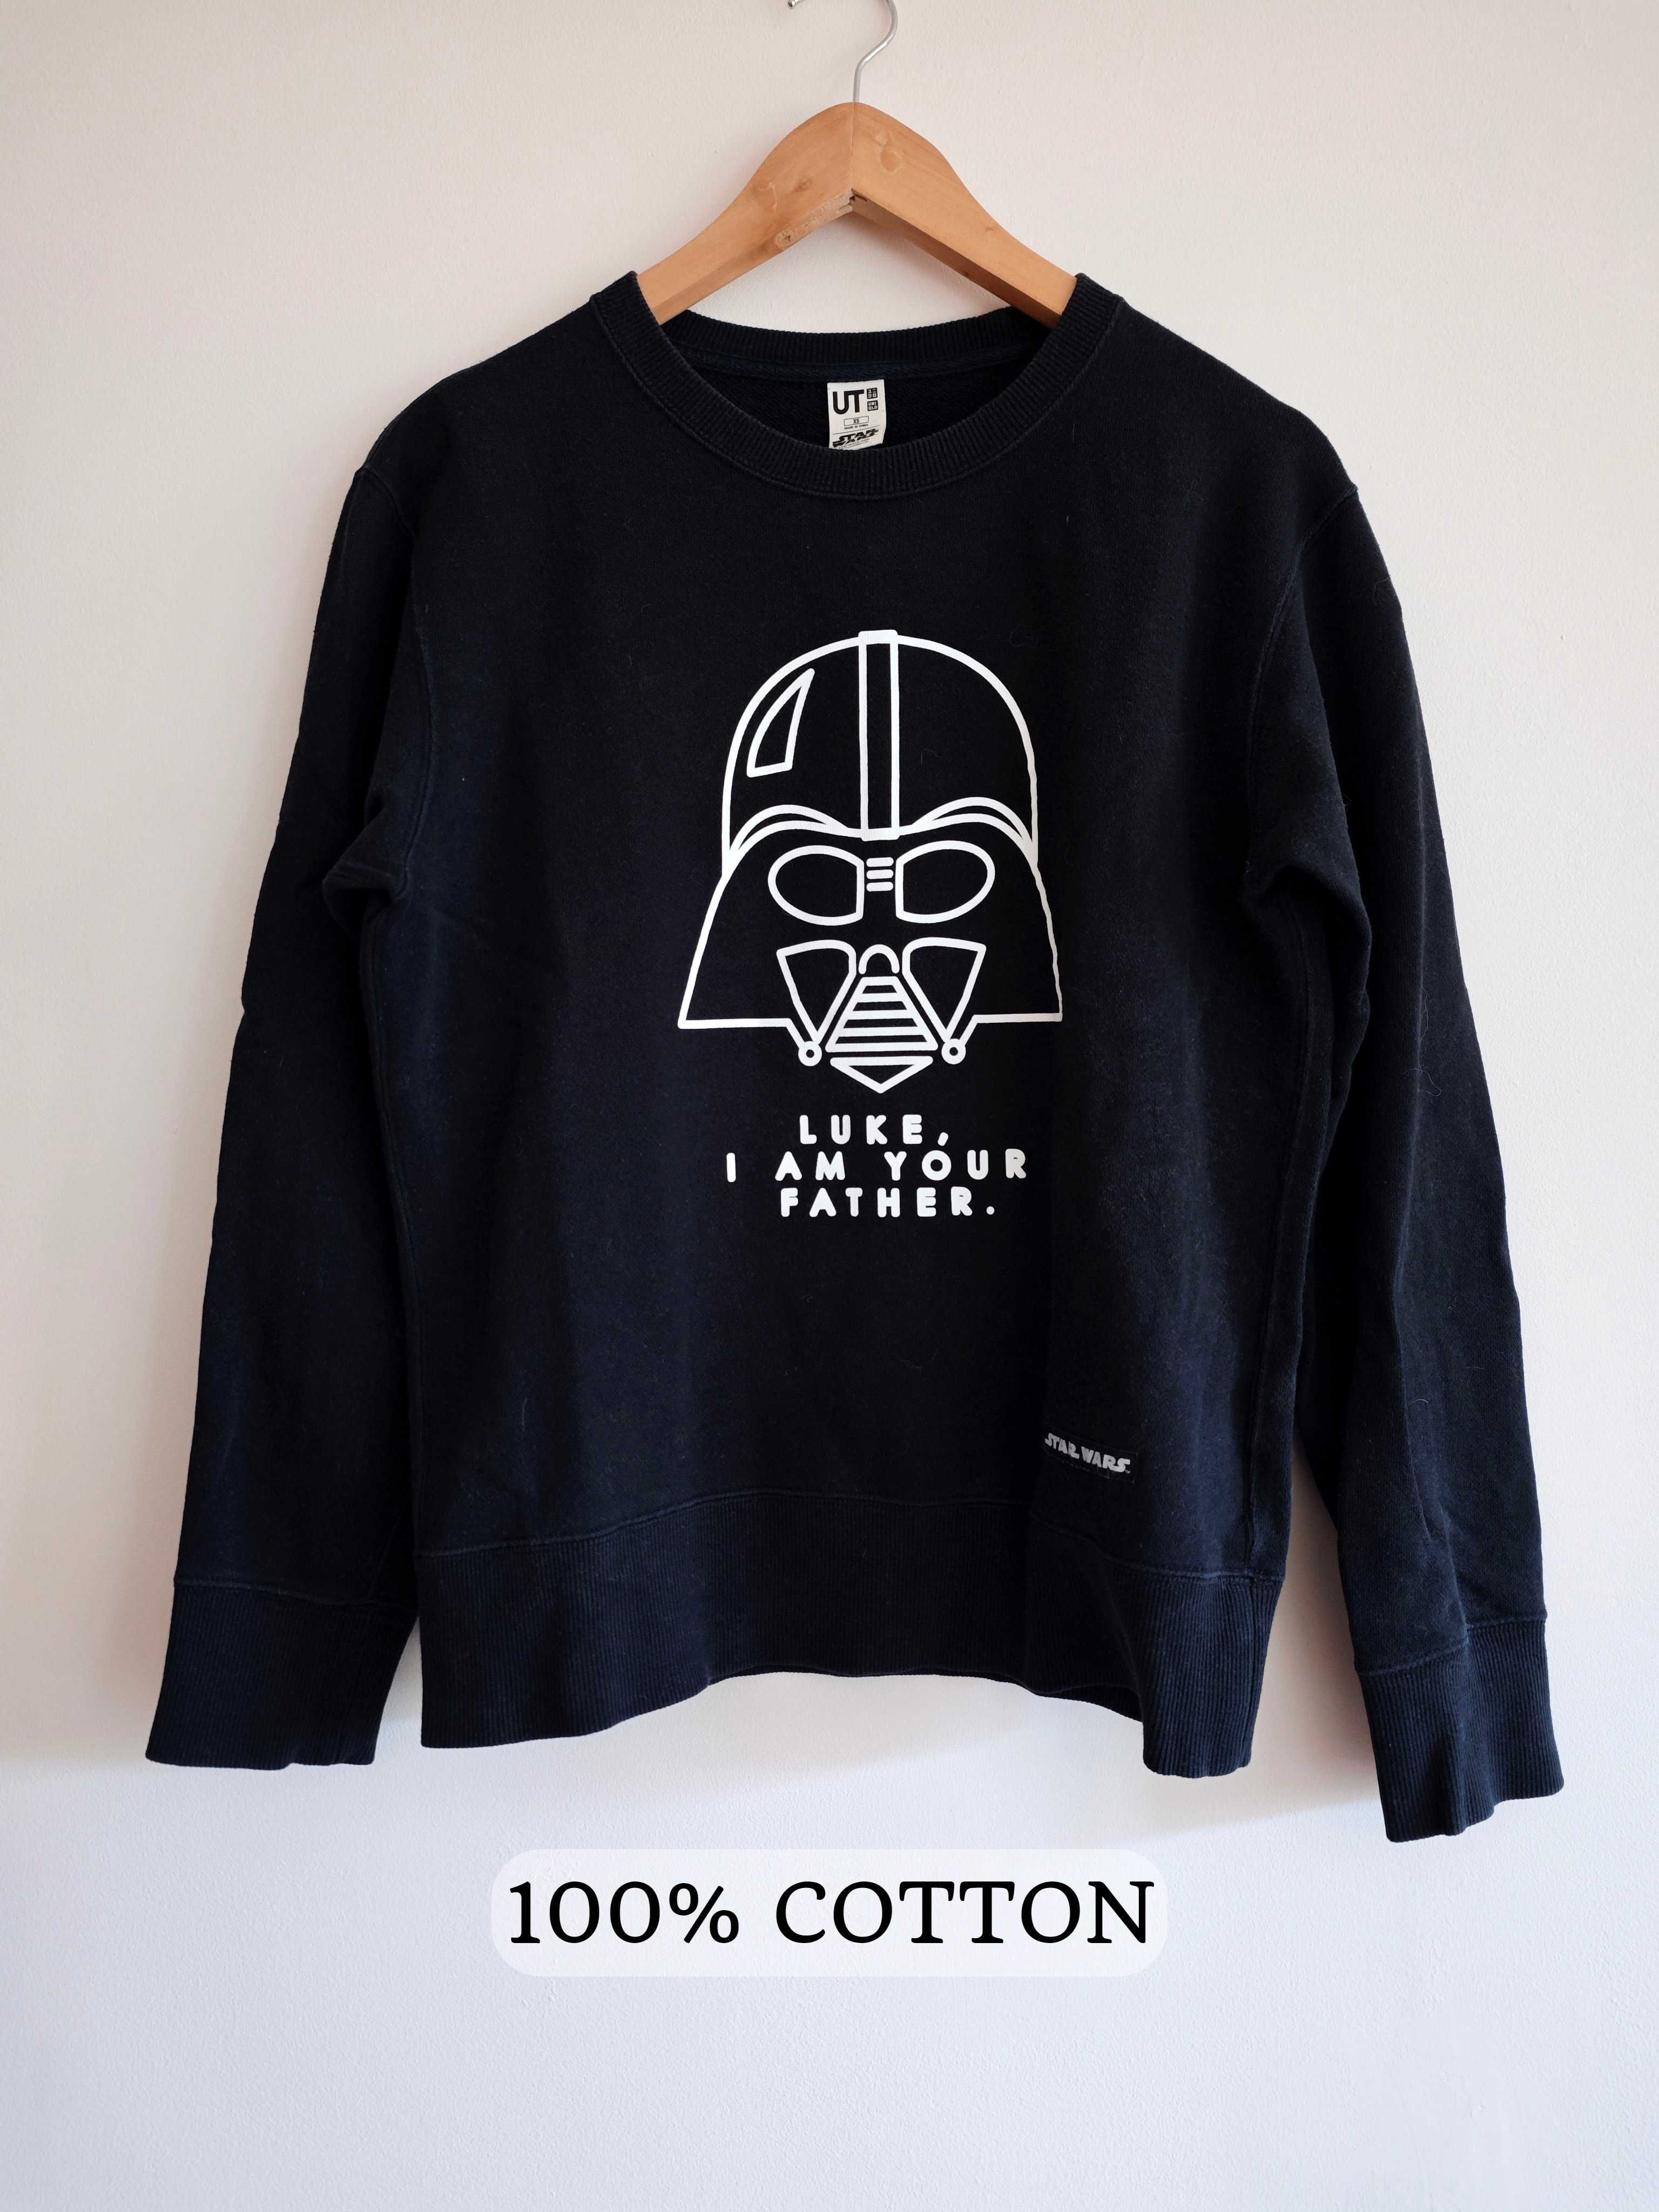 Uniqlo x Star Wars bluza sweater oversize unisex